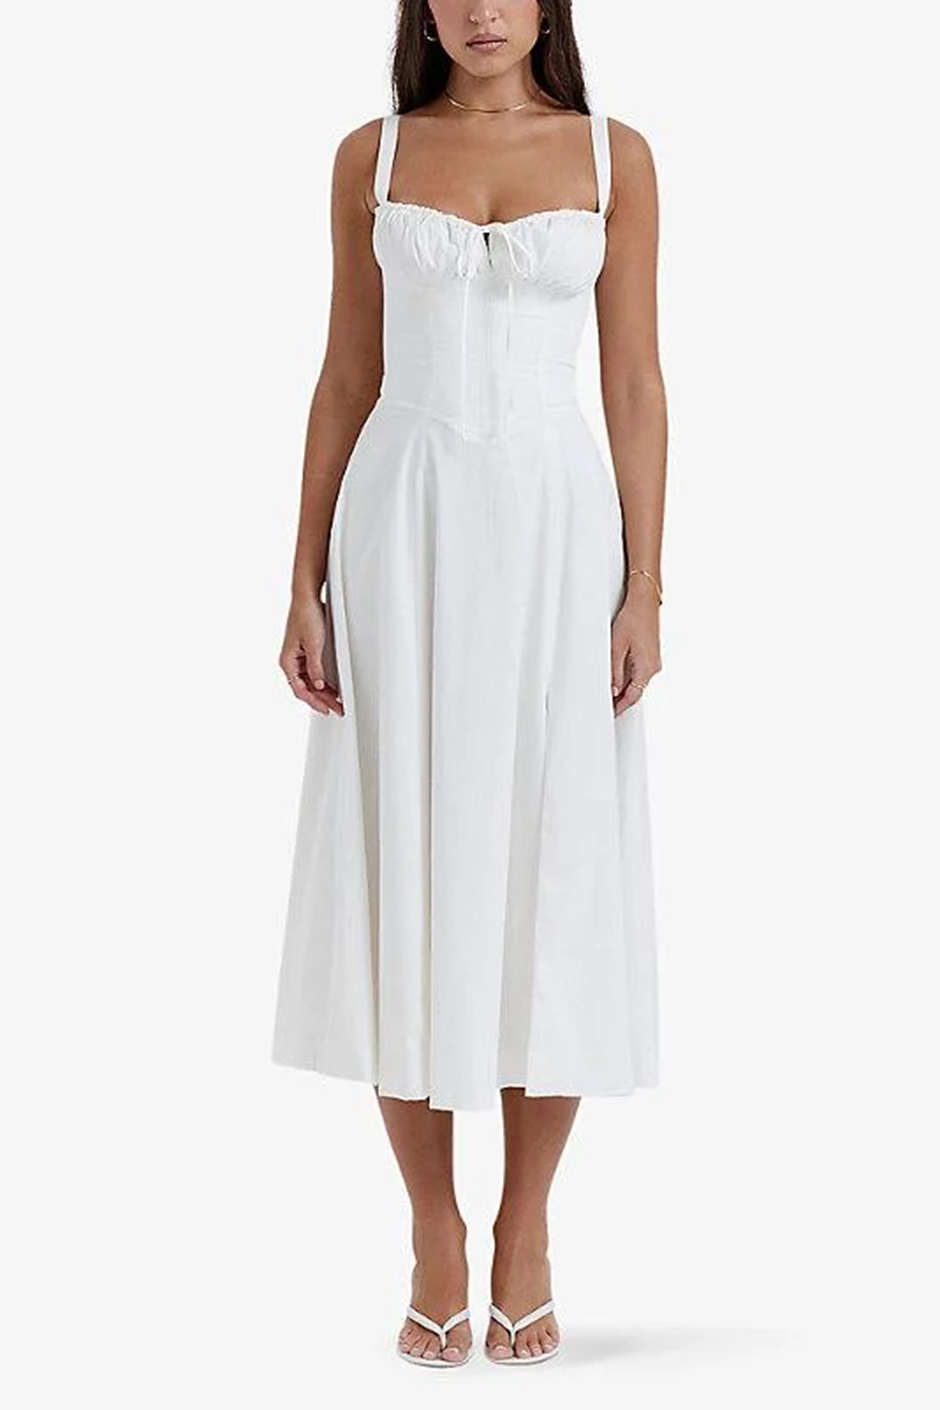 house-of-cb-WHITE-Carmen-Gathered-cup-Stretch-Cotton-blend-Midi-Dress.jpg